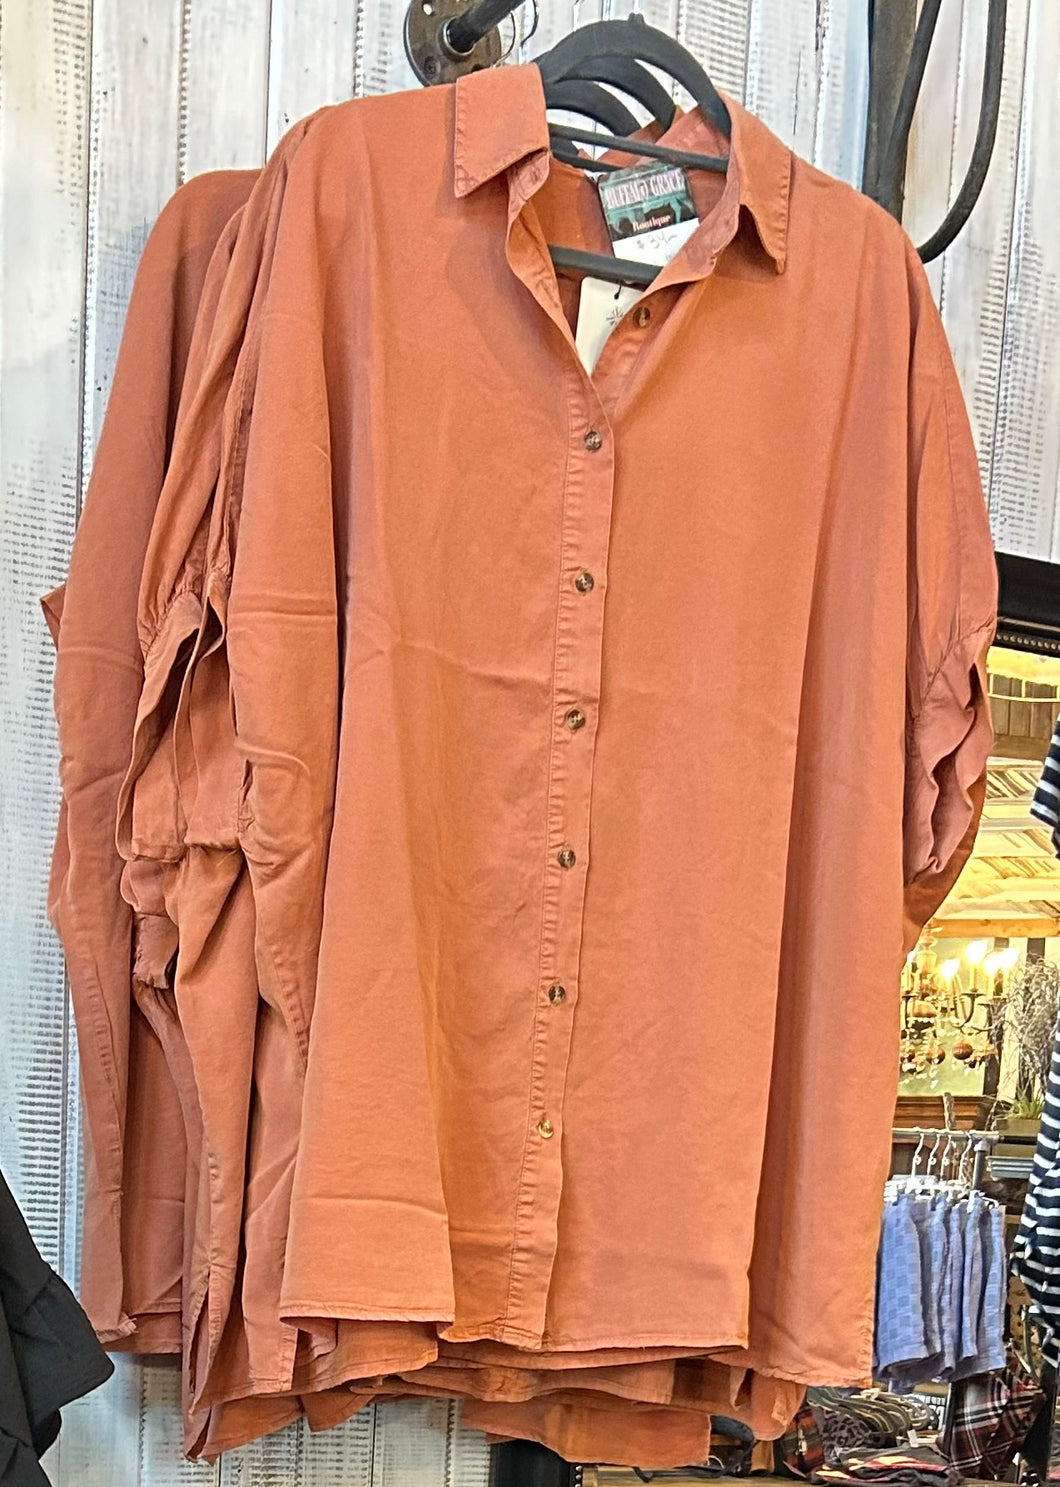 Top: Oversized Rusted orange top